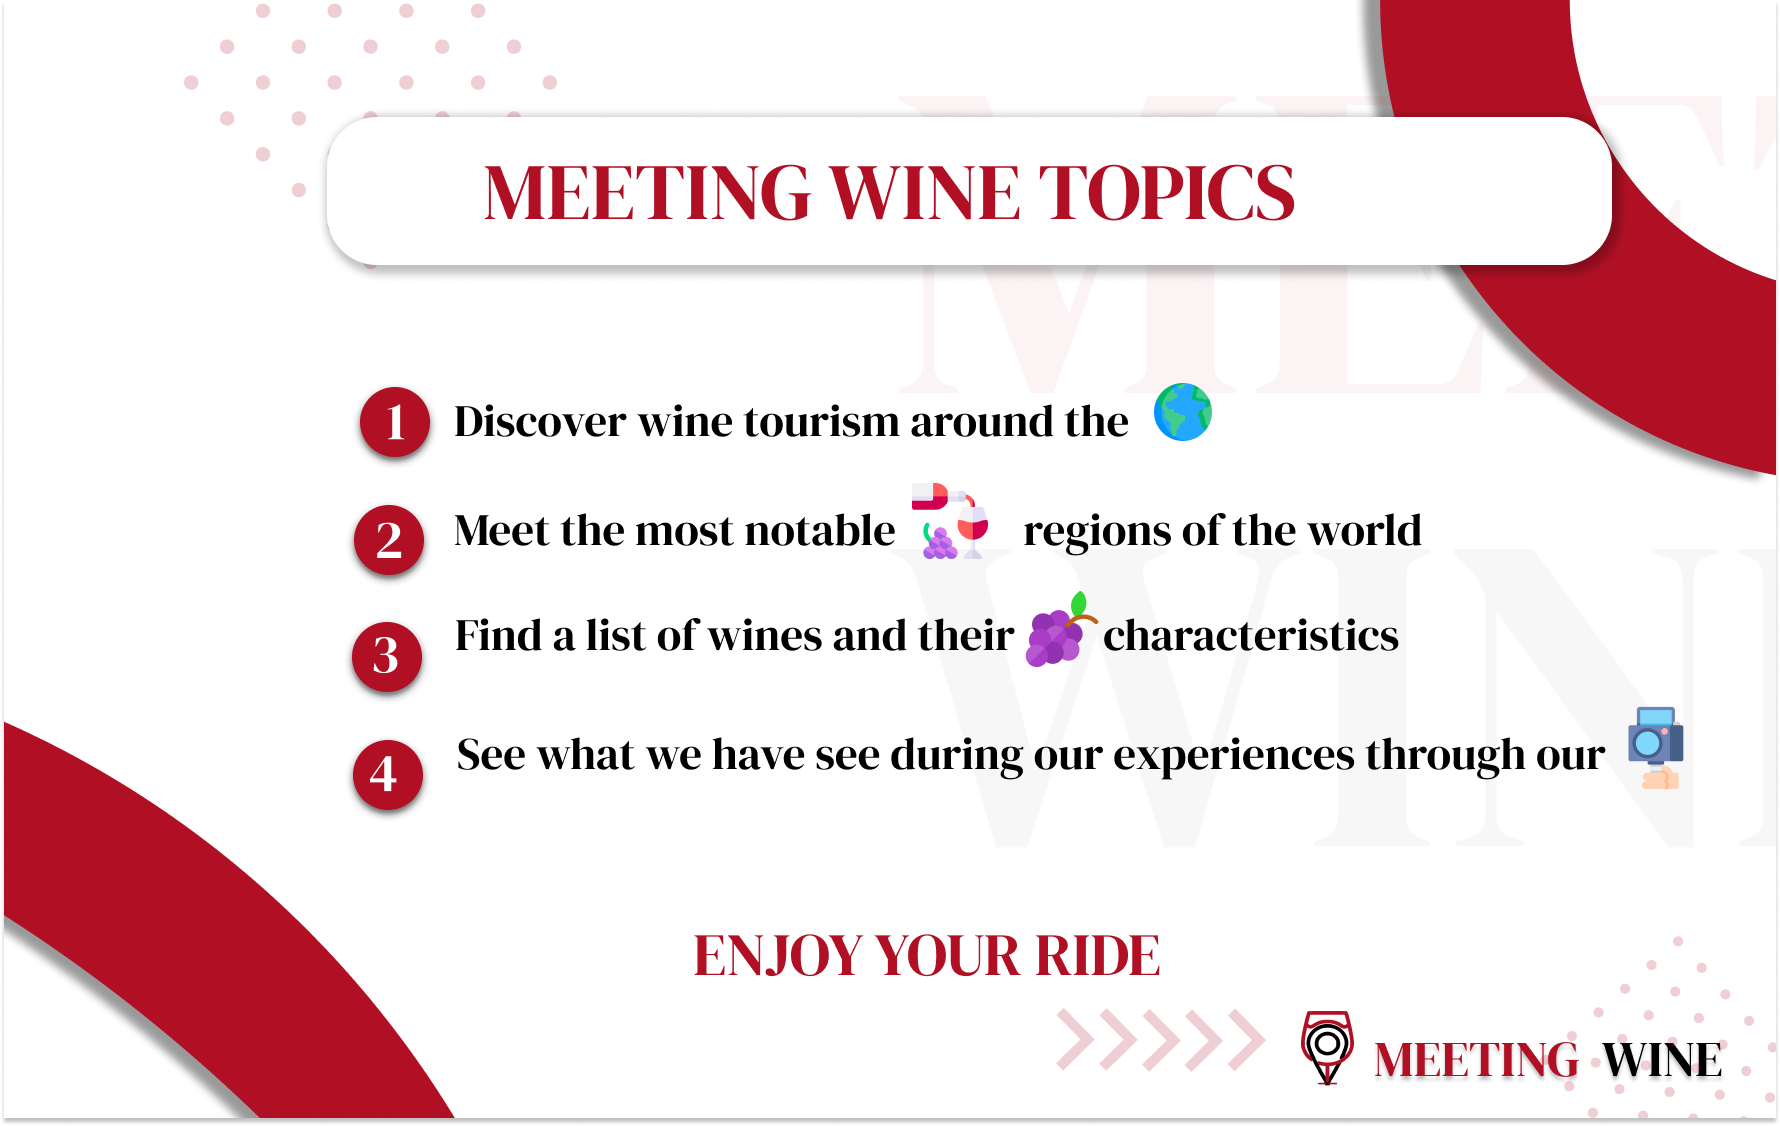 Wine Tourism blog content